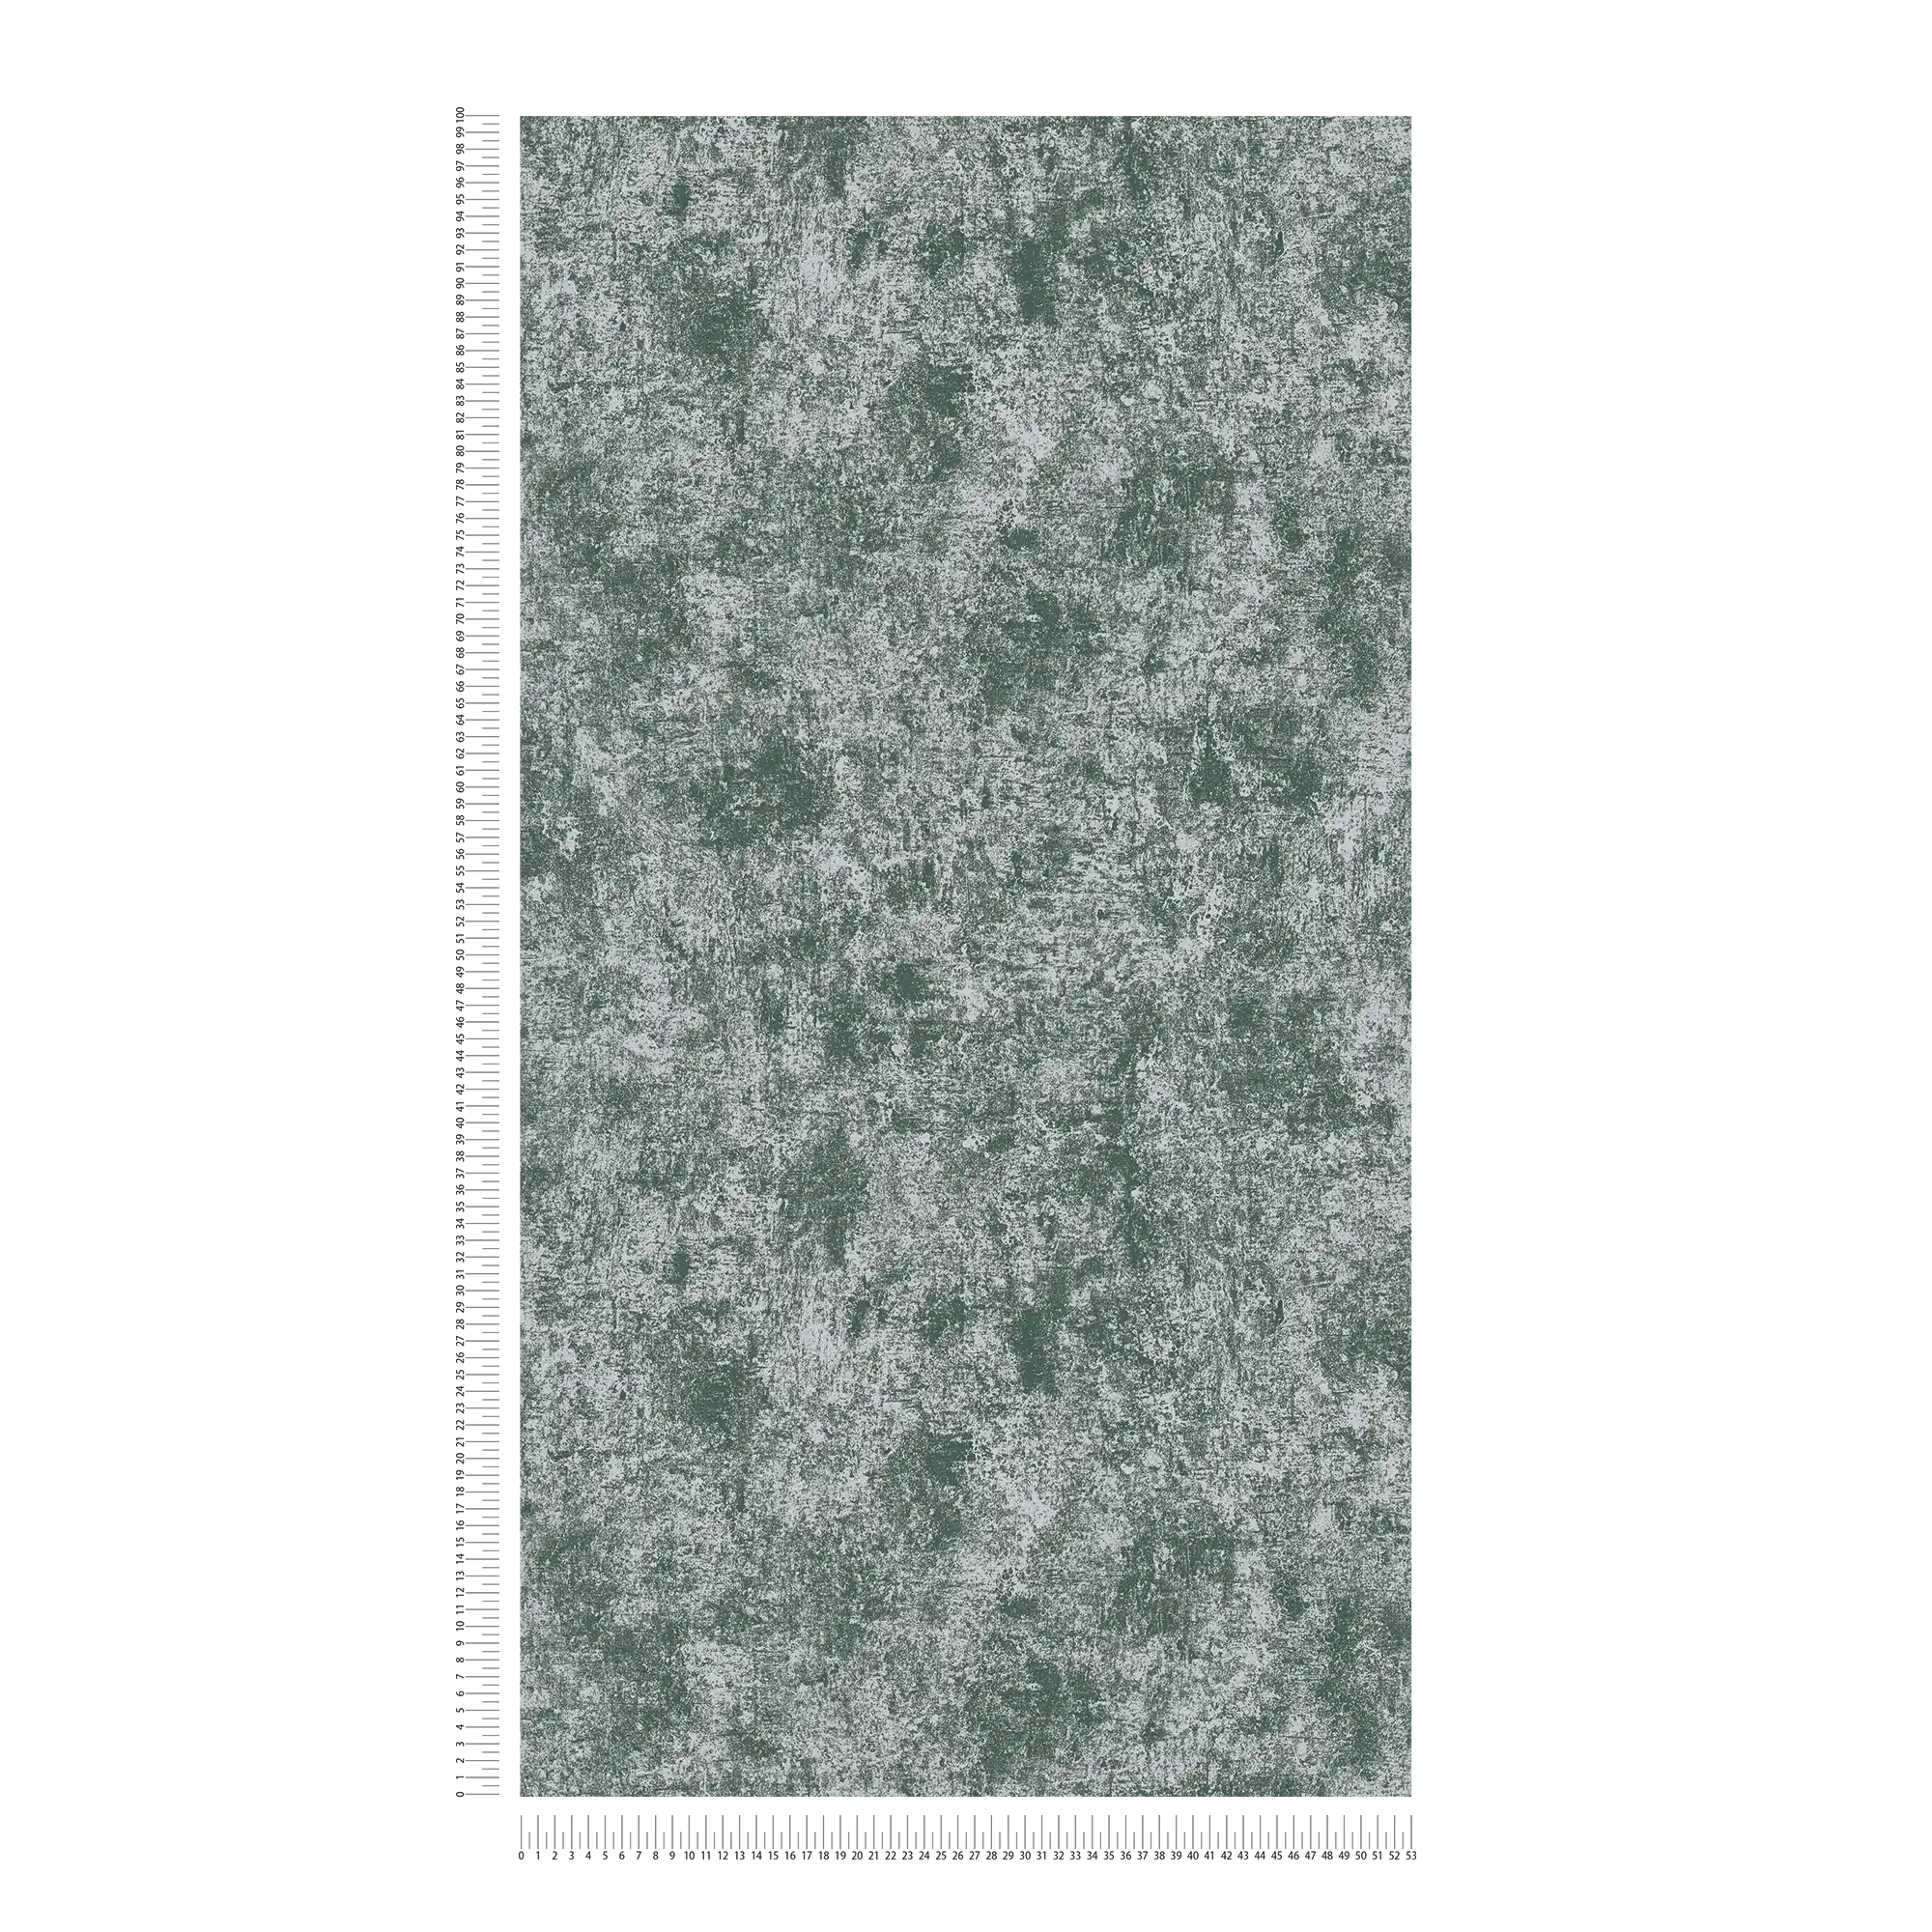             Carta da parati effetto metallo con effetto lucido liscio - verde, argento
        